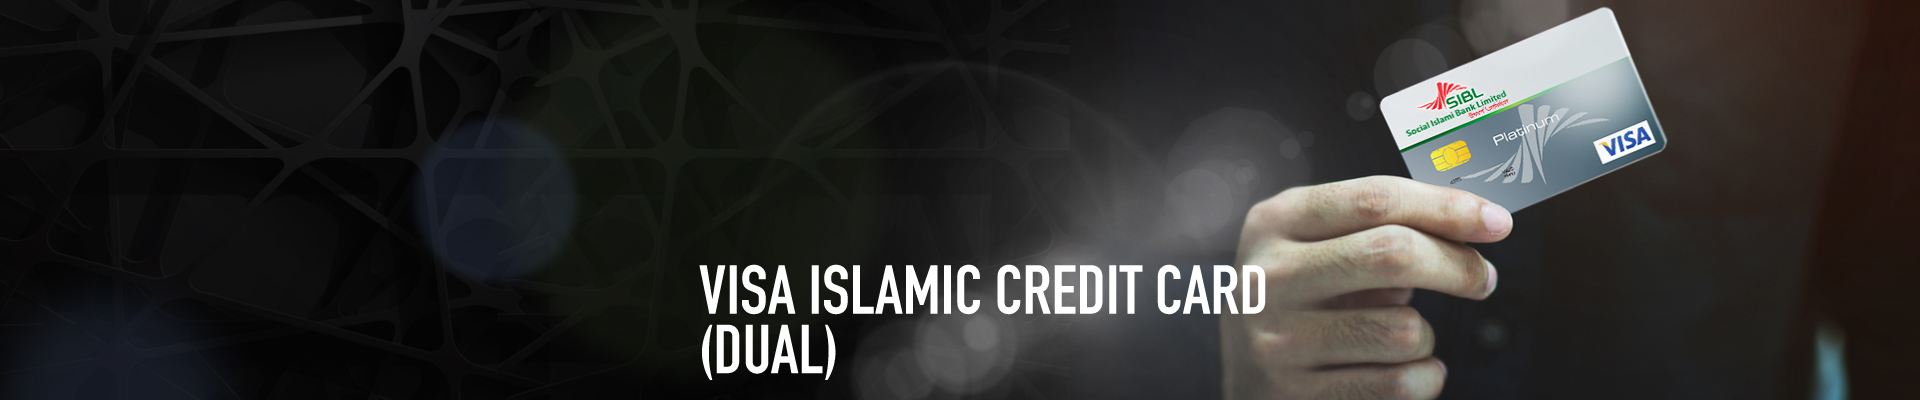 Visa Islamic Credit Card (Dual) - Dhaka